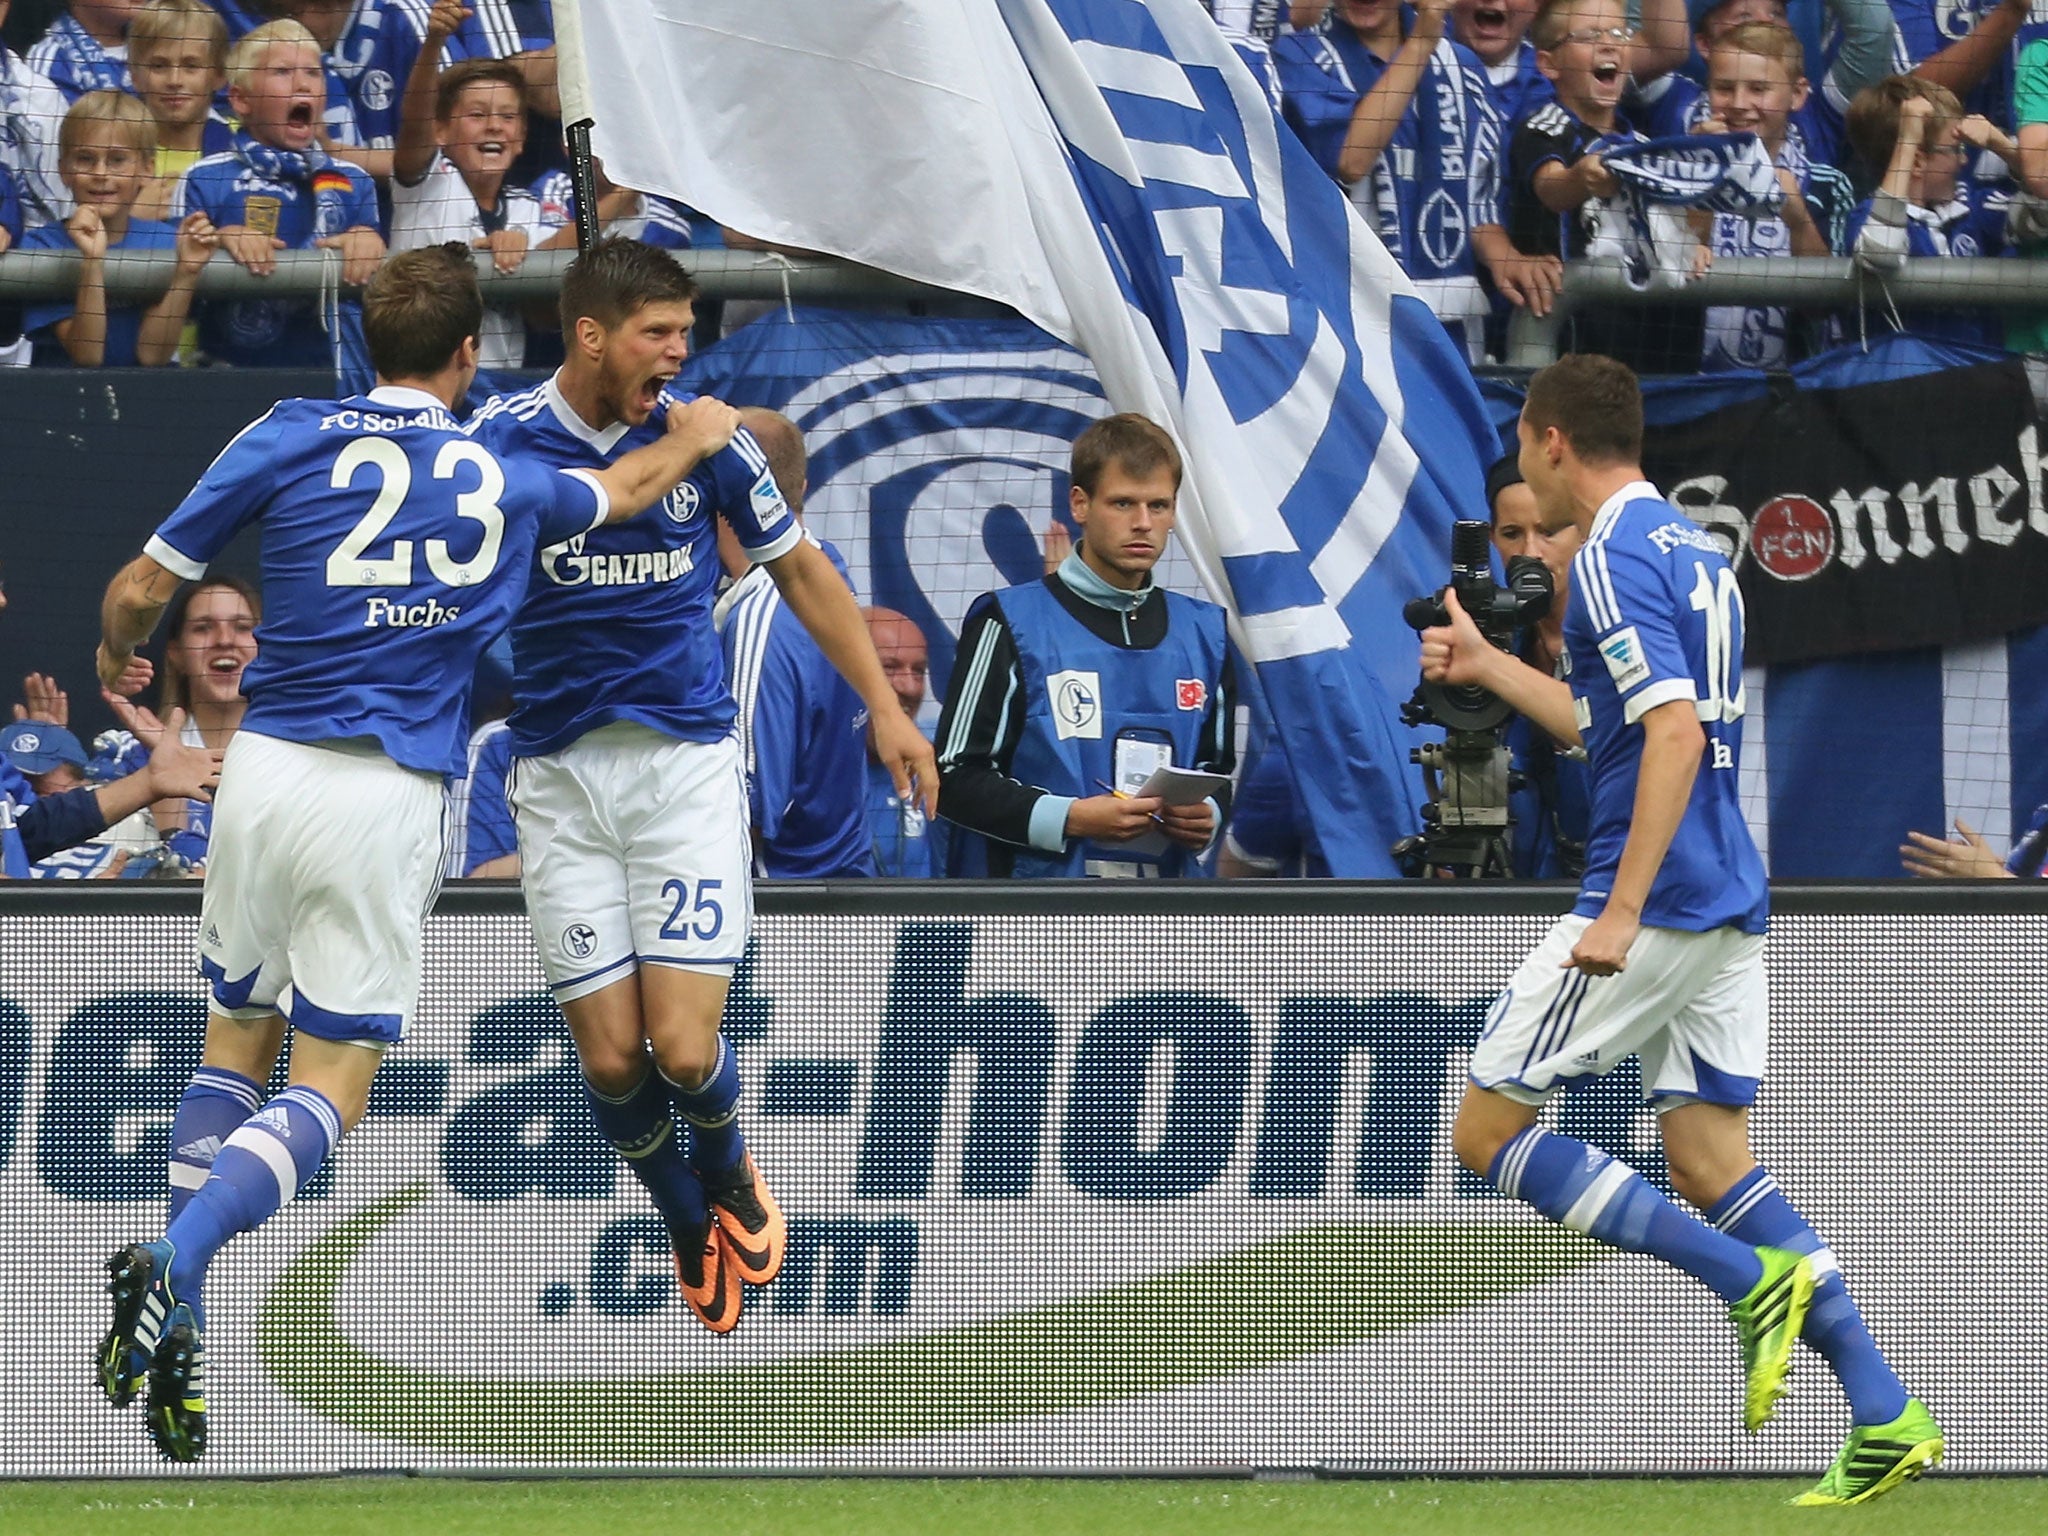 Schalke and Hamburg shared six goals in a rollercoaster 3-3 draw at the Arena AufSchalke